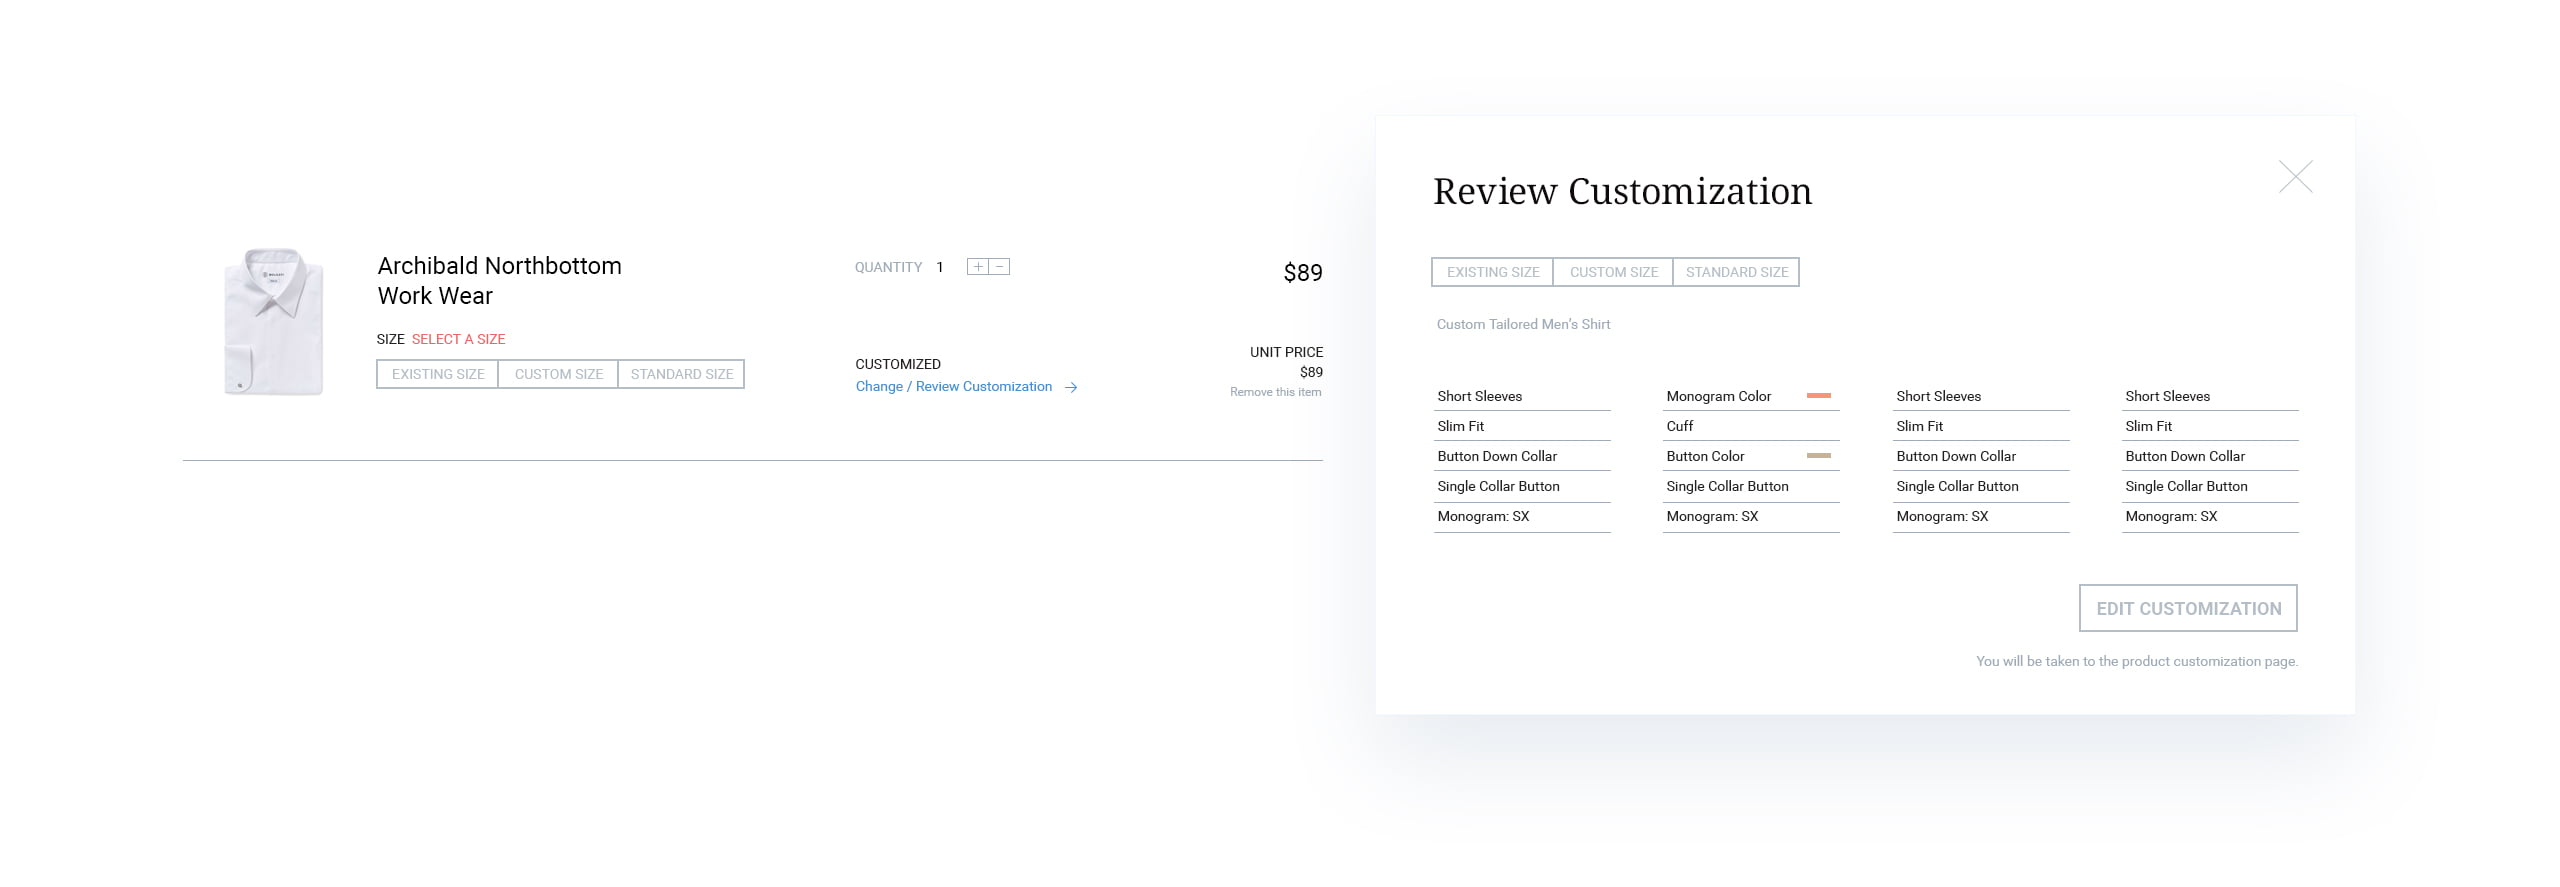 Review Customization-1x